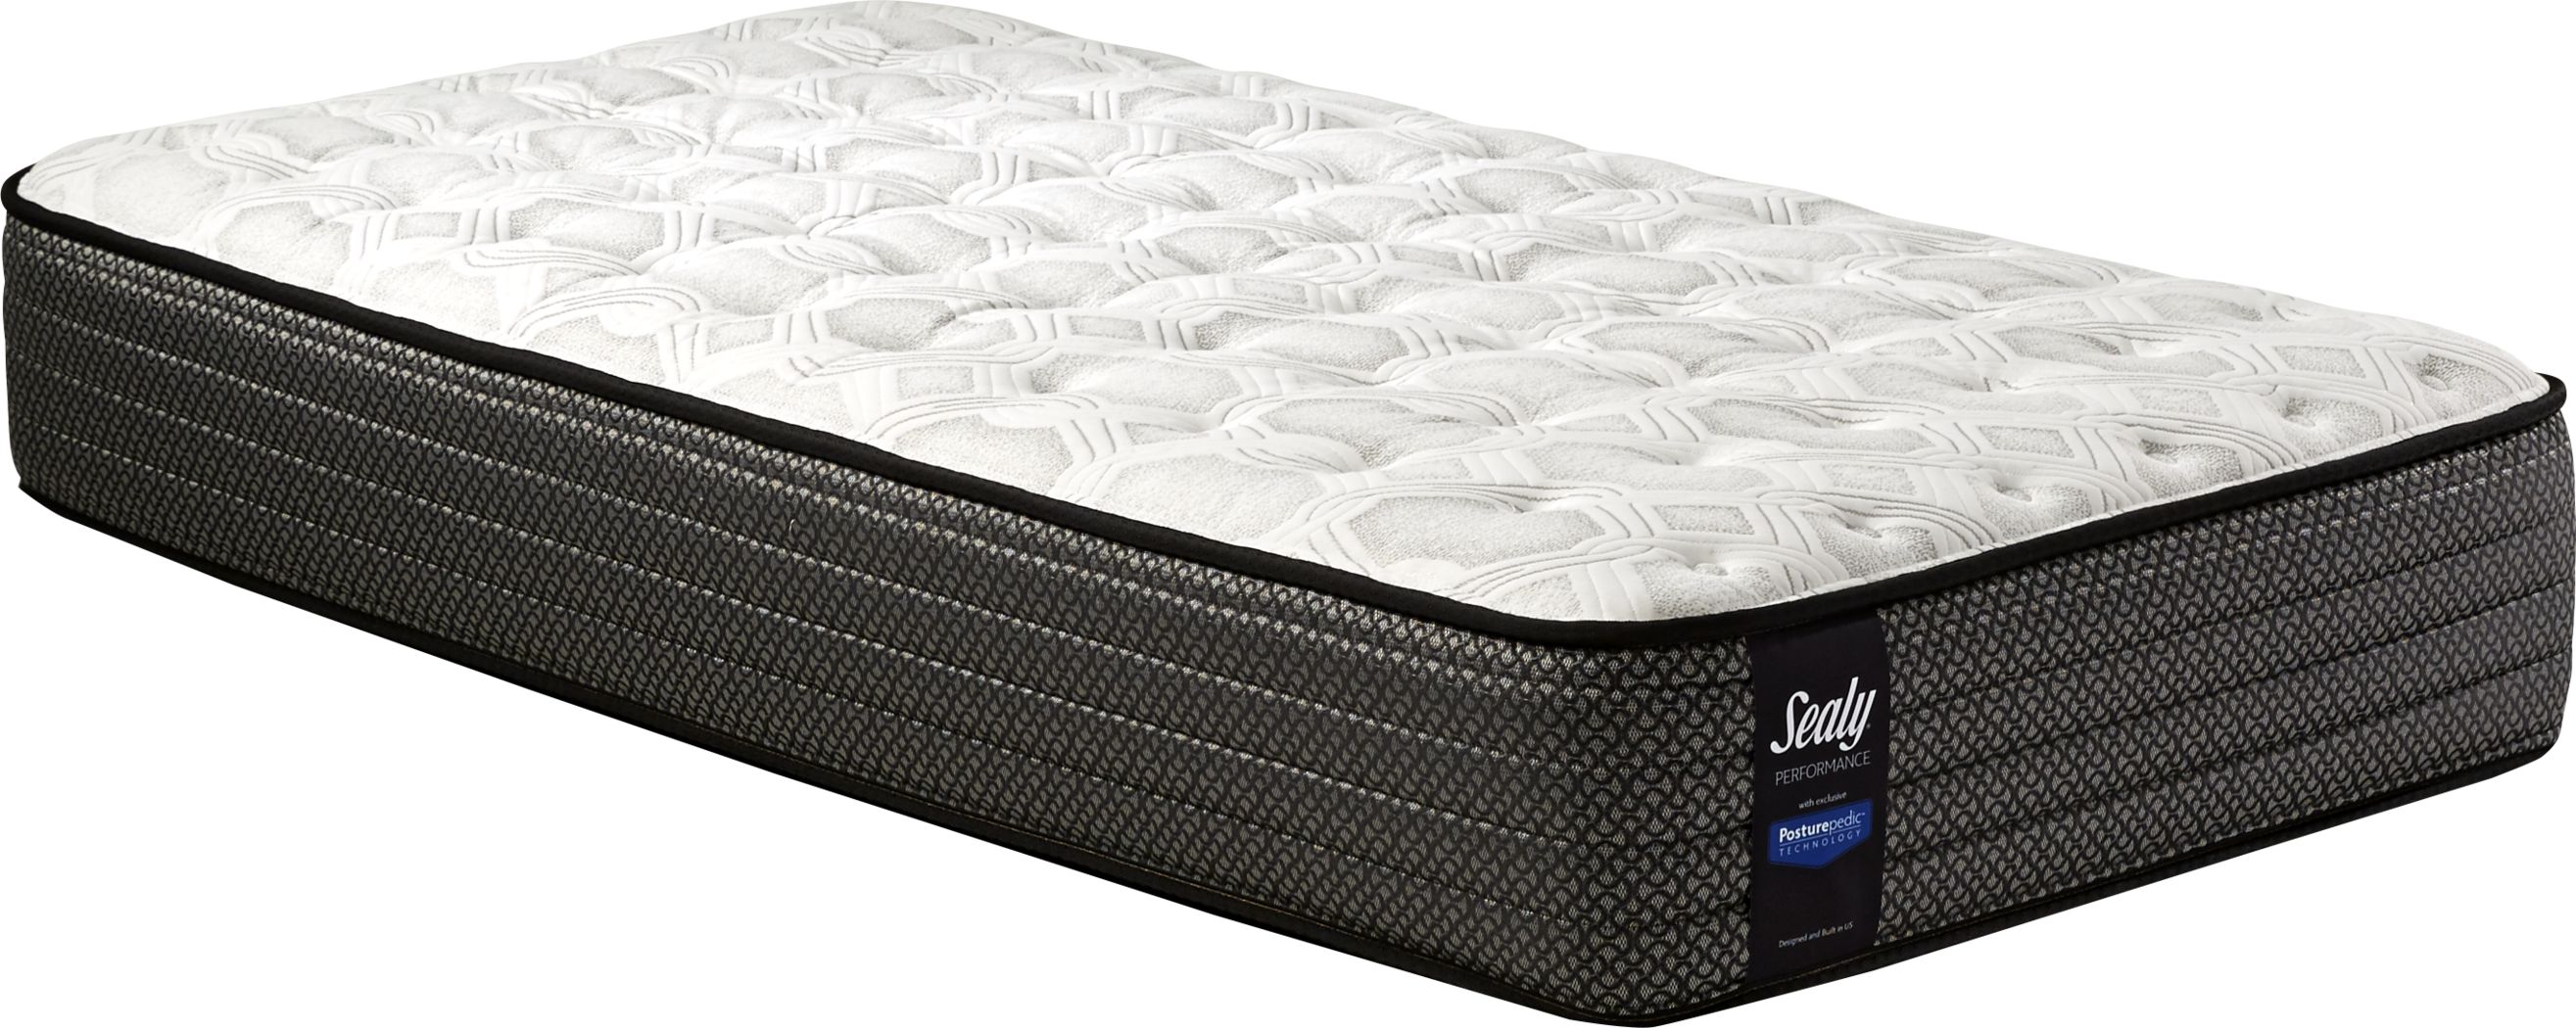 sealy mattress for crib